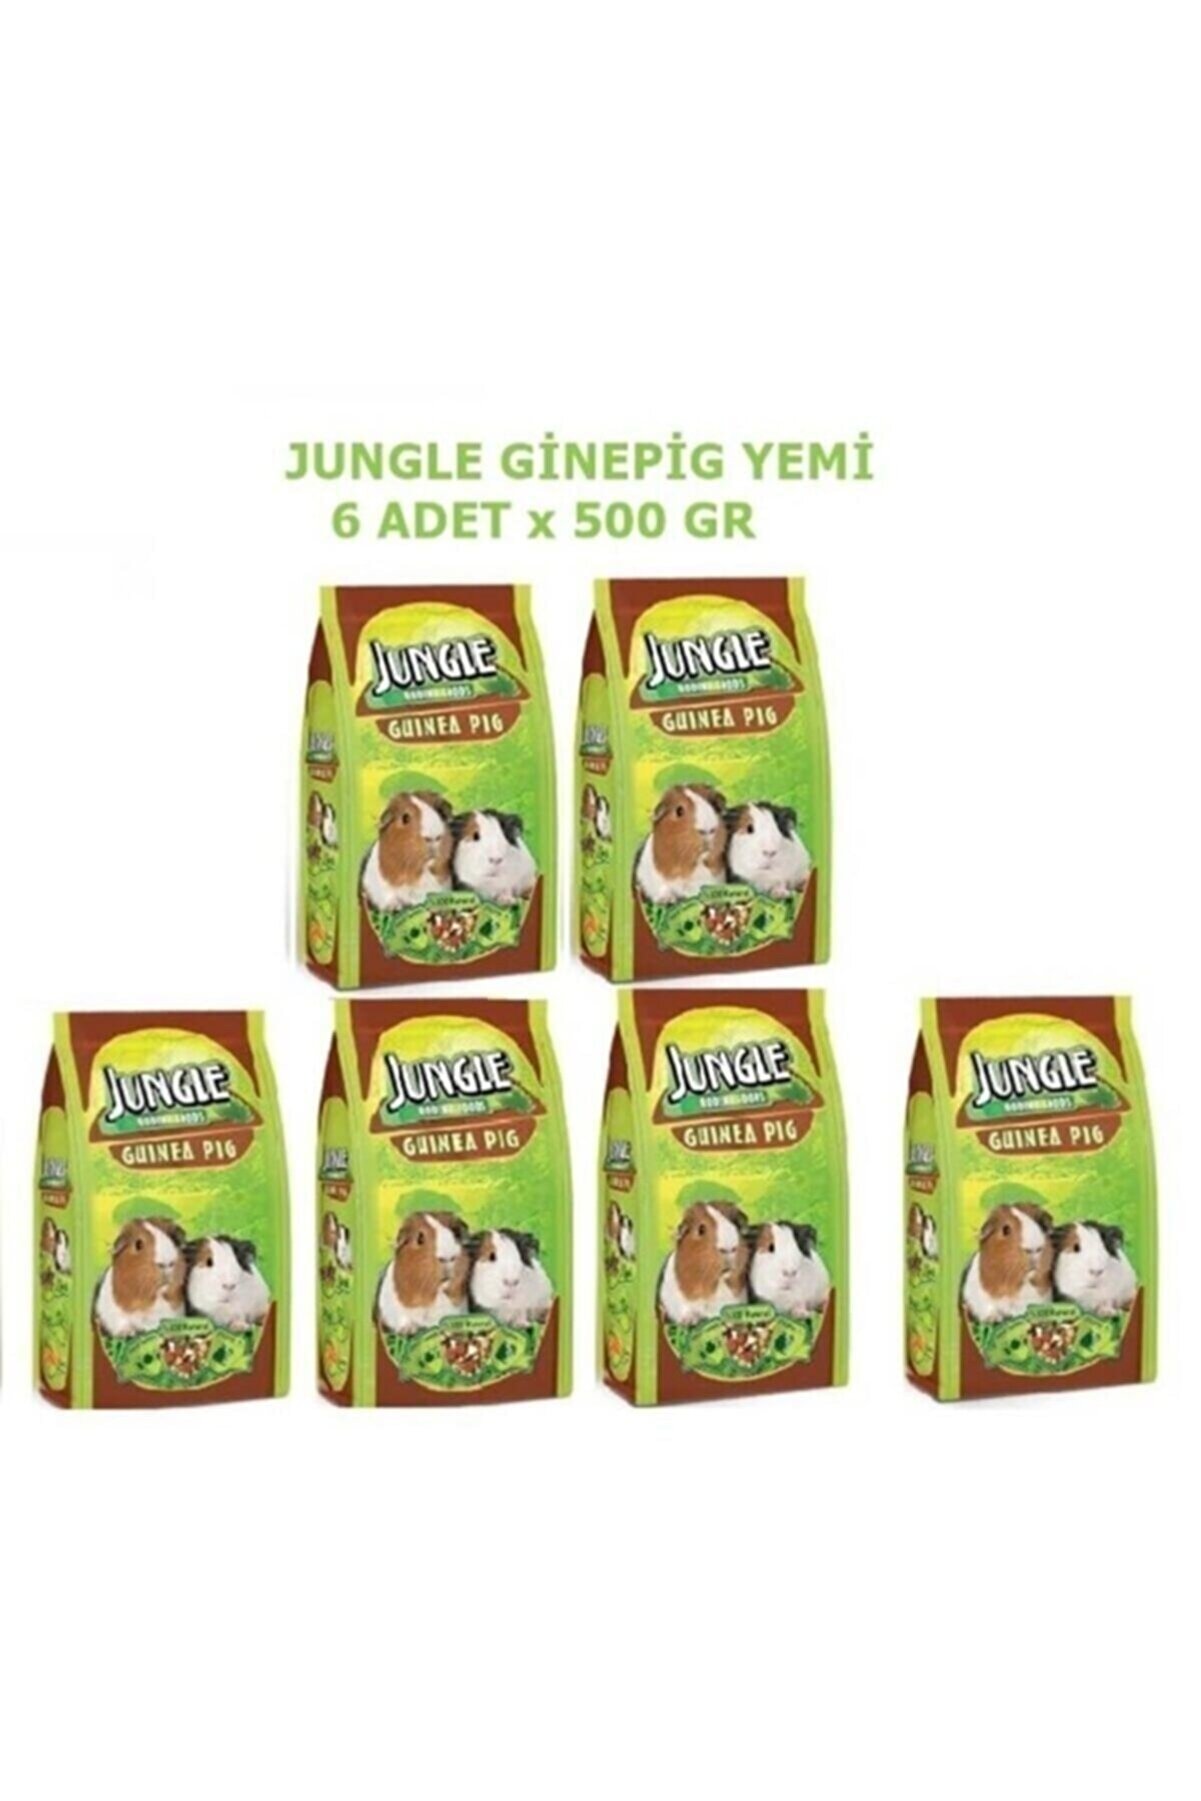 Jungle Ginepig Yemi 500 Gr X 6 Adet